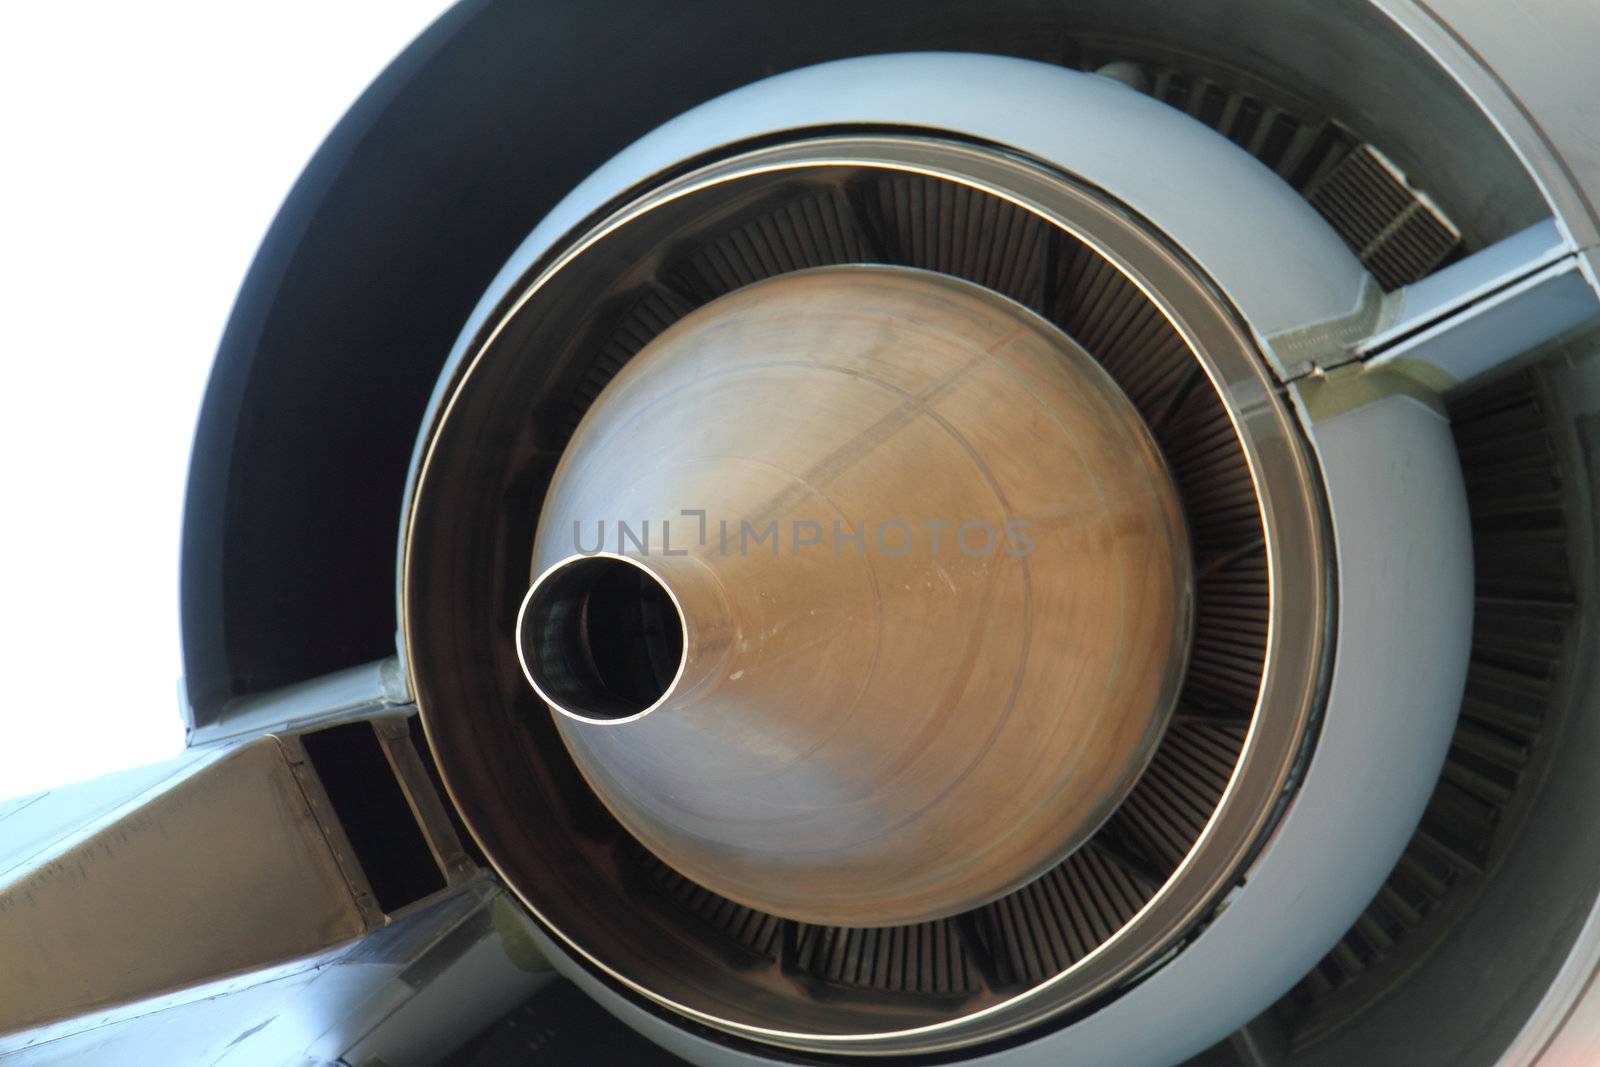 aircraft turbine as very nice technology background